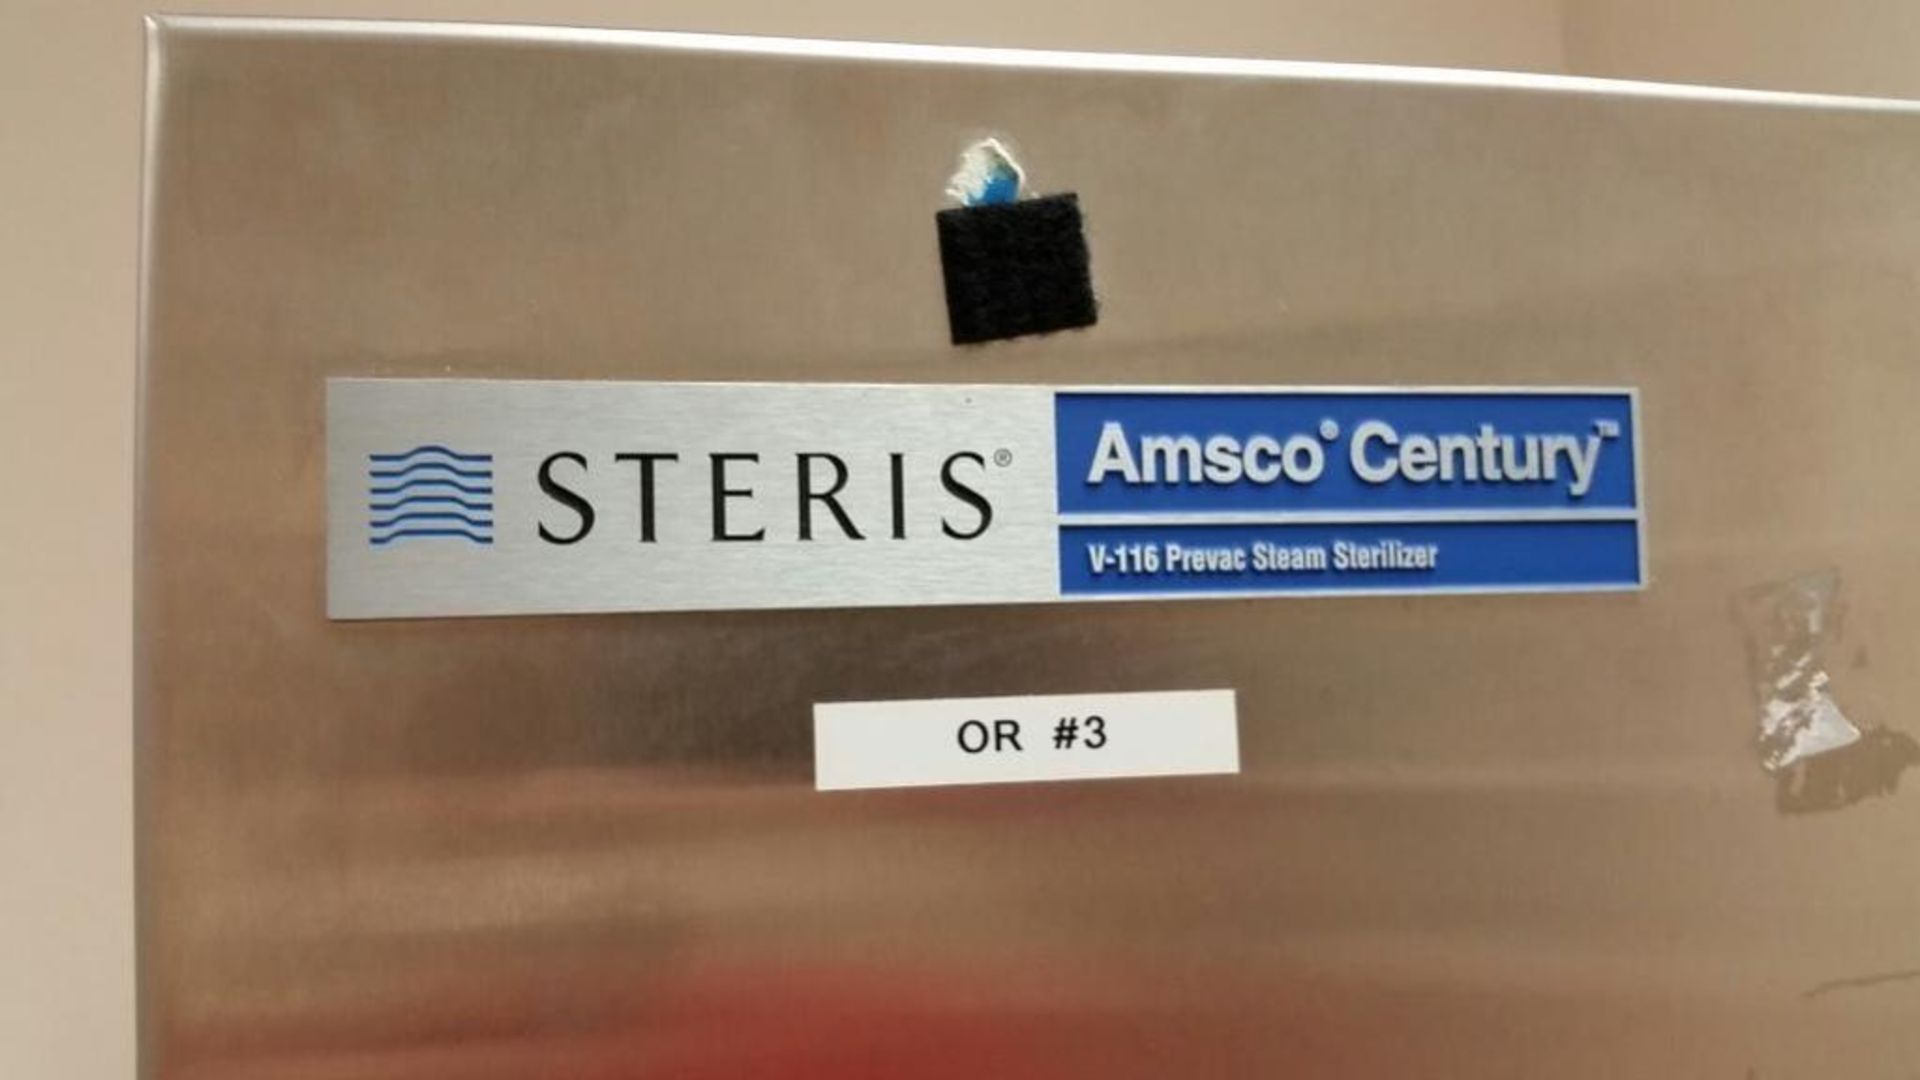 Steris Amsco Century V-116 Pervac Steam Sterilizer - Image 2 of 3